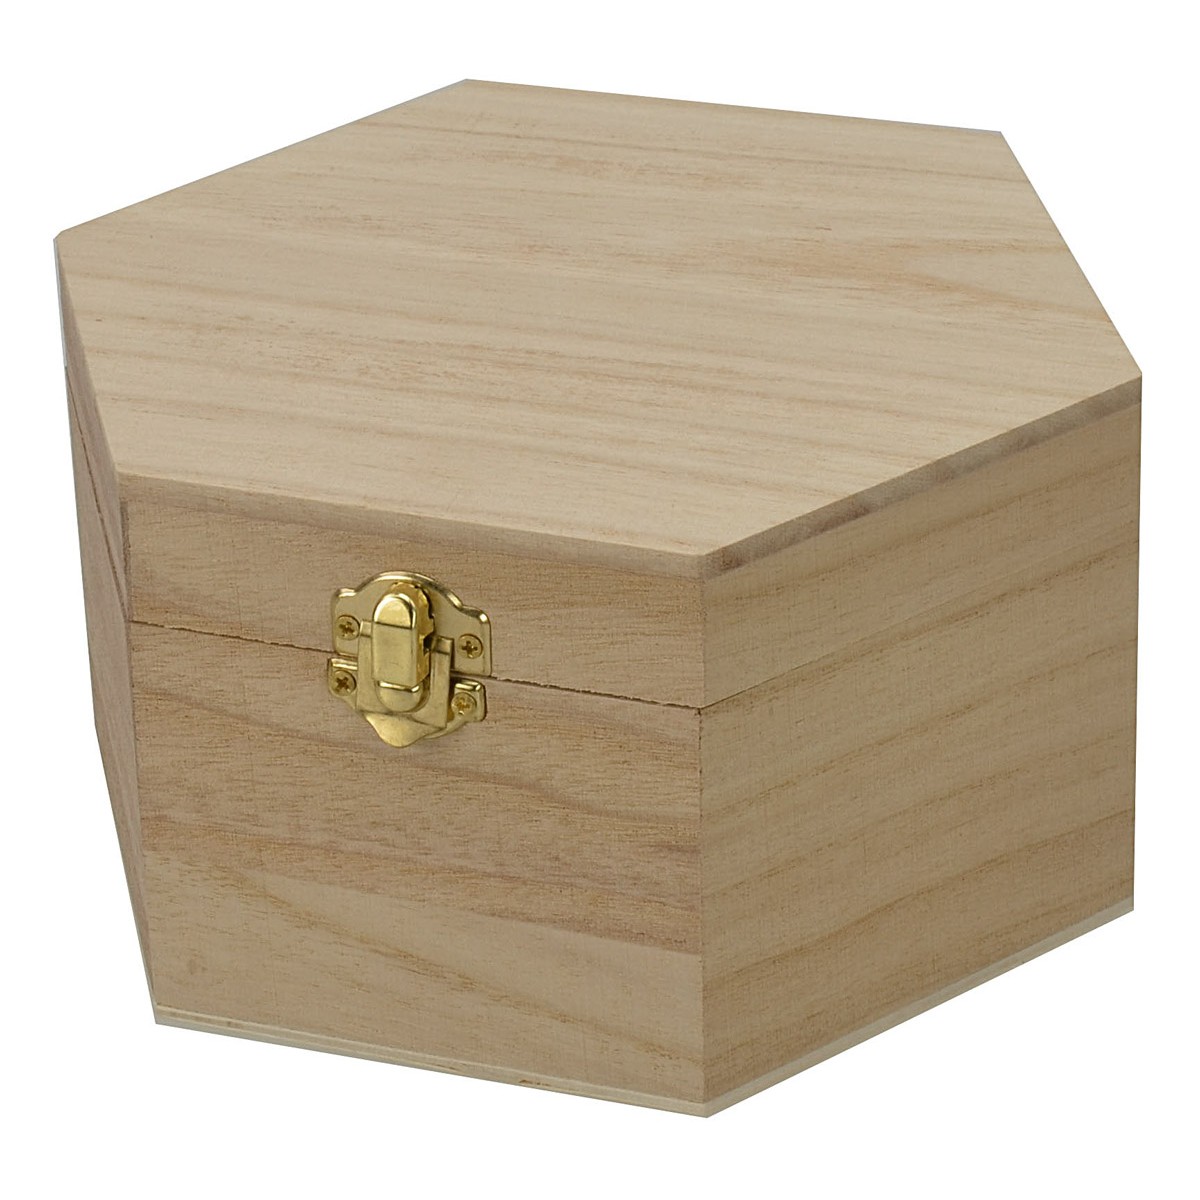 https://www.mondopresepi.com/42164-thickbox_default/scatola-esagonale-in-legno-cm-187x162x98-h.jpg